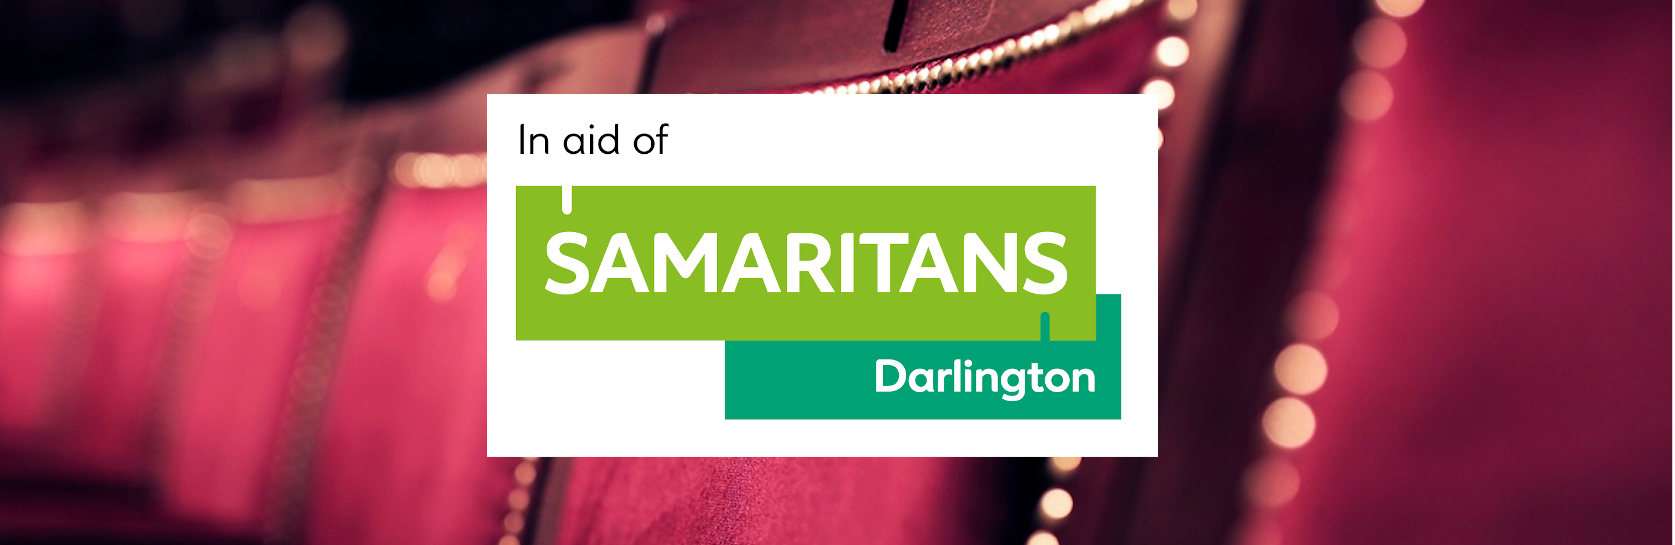 Darlington Hippodrome staff have selected Darlington Samaritans as their new annual charity partner